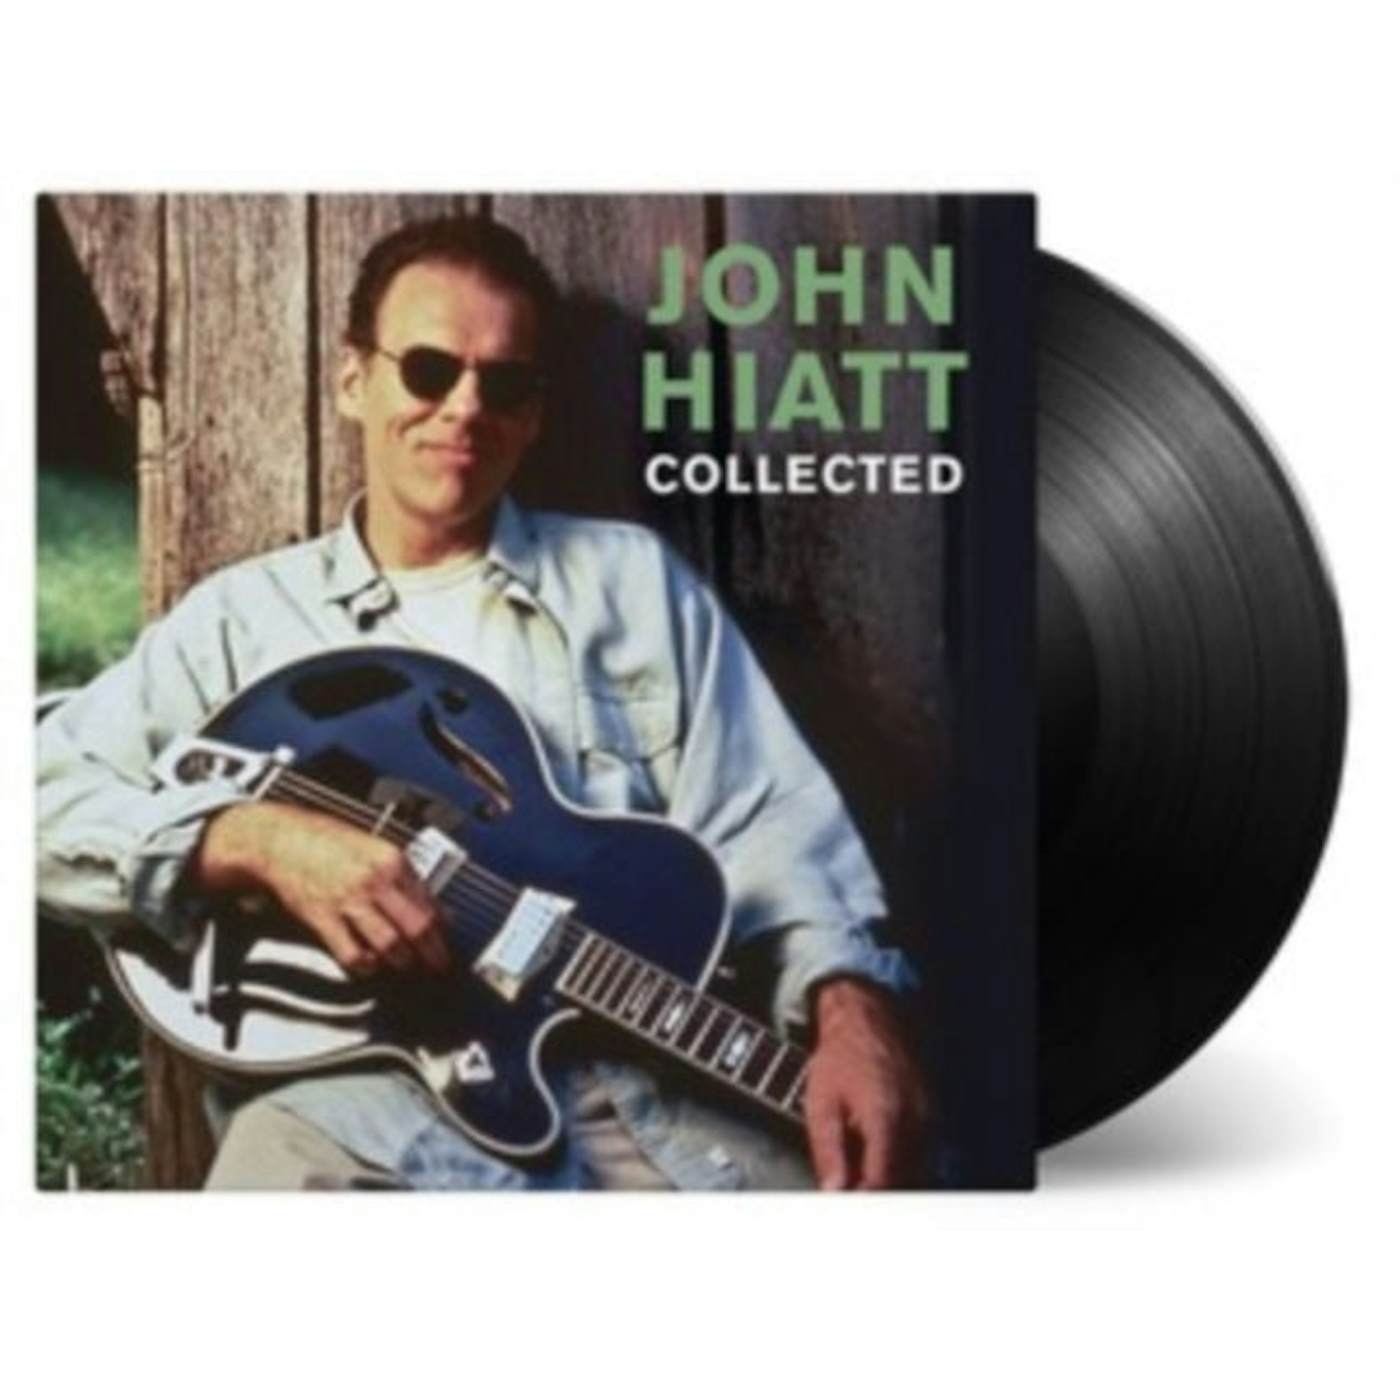 John Hiatt LP - Collected (Vinyl)